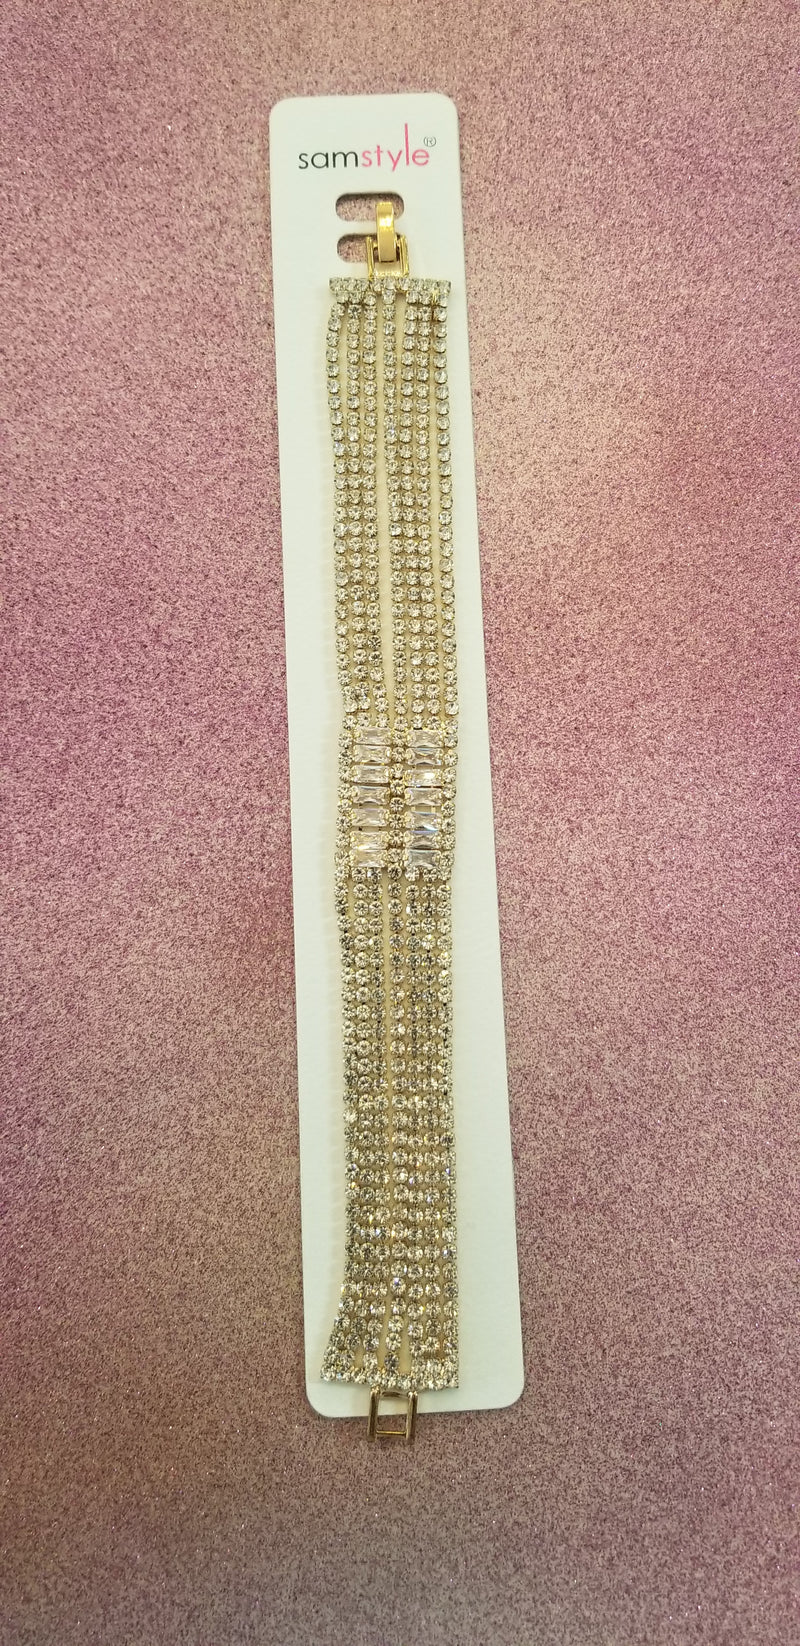 Rhinestone Crystal Bracelet